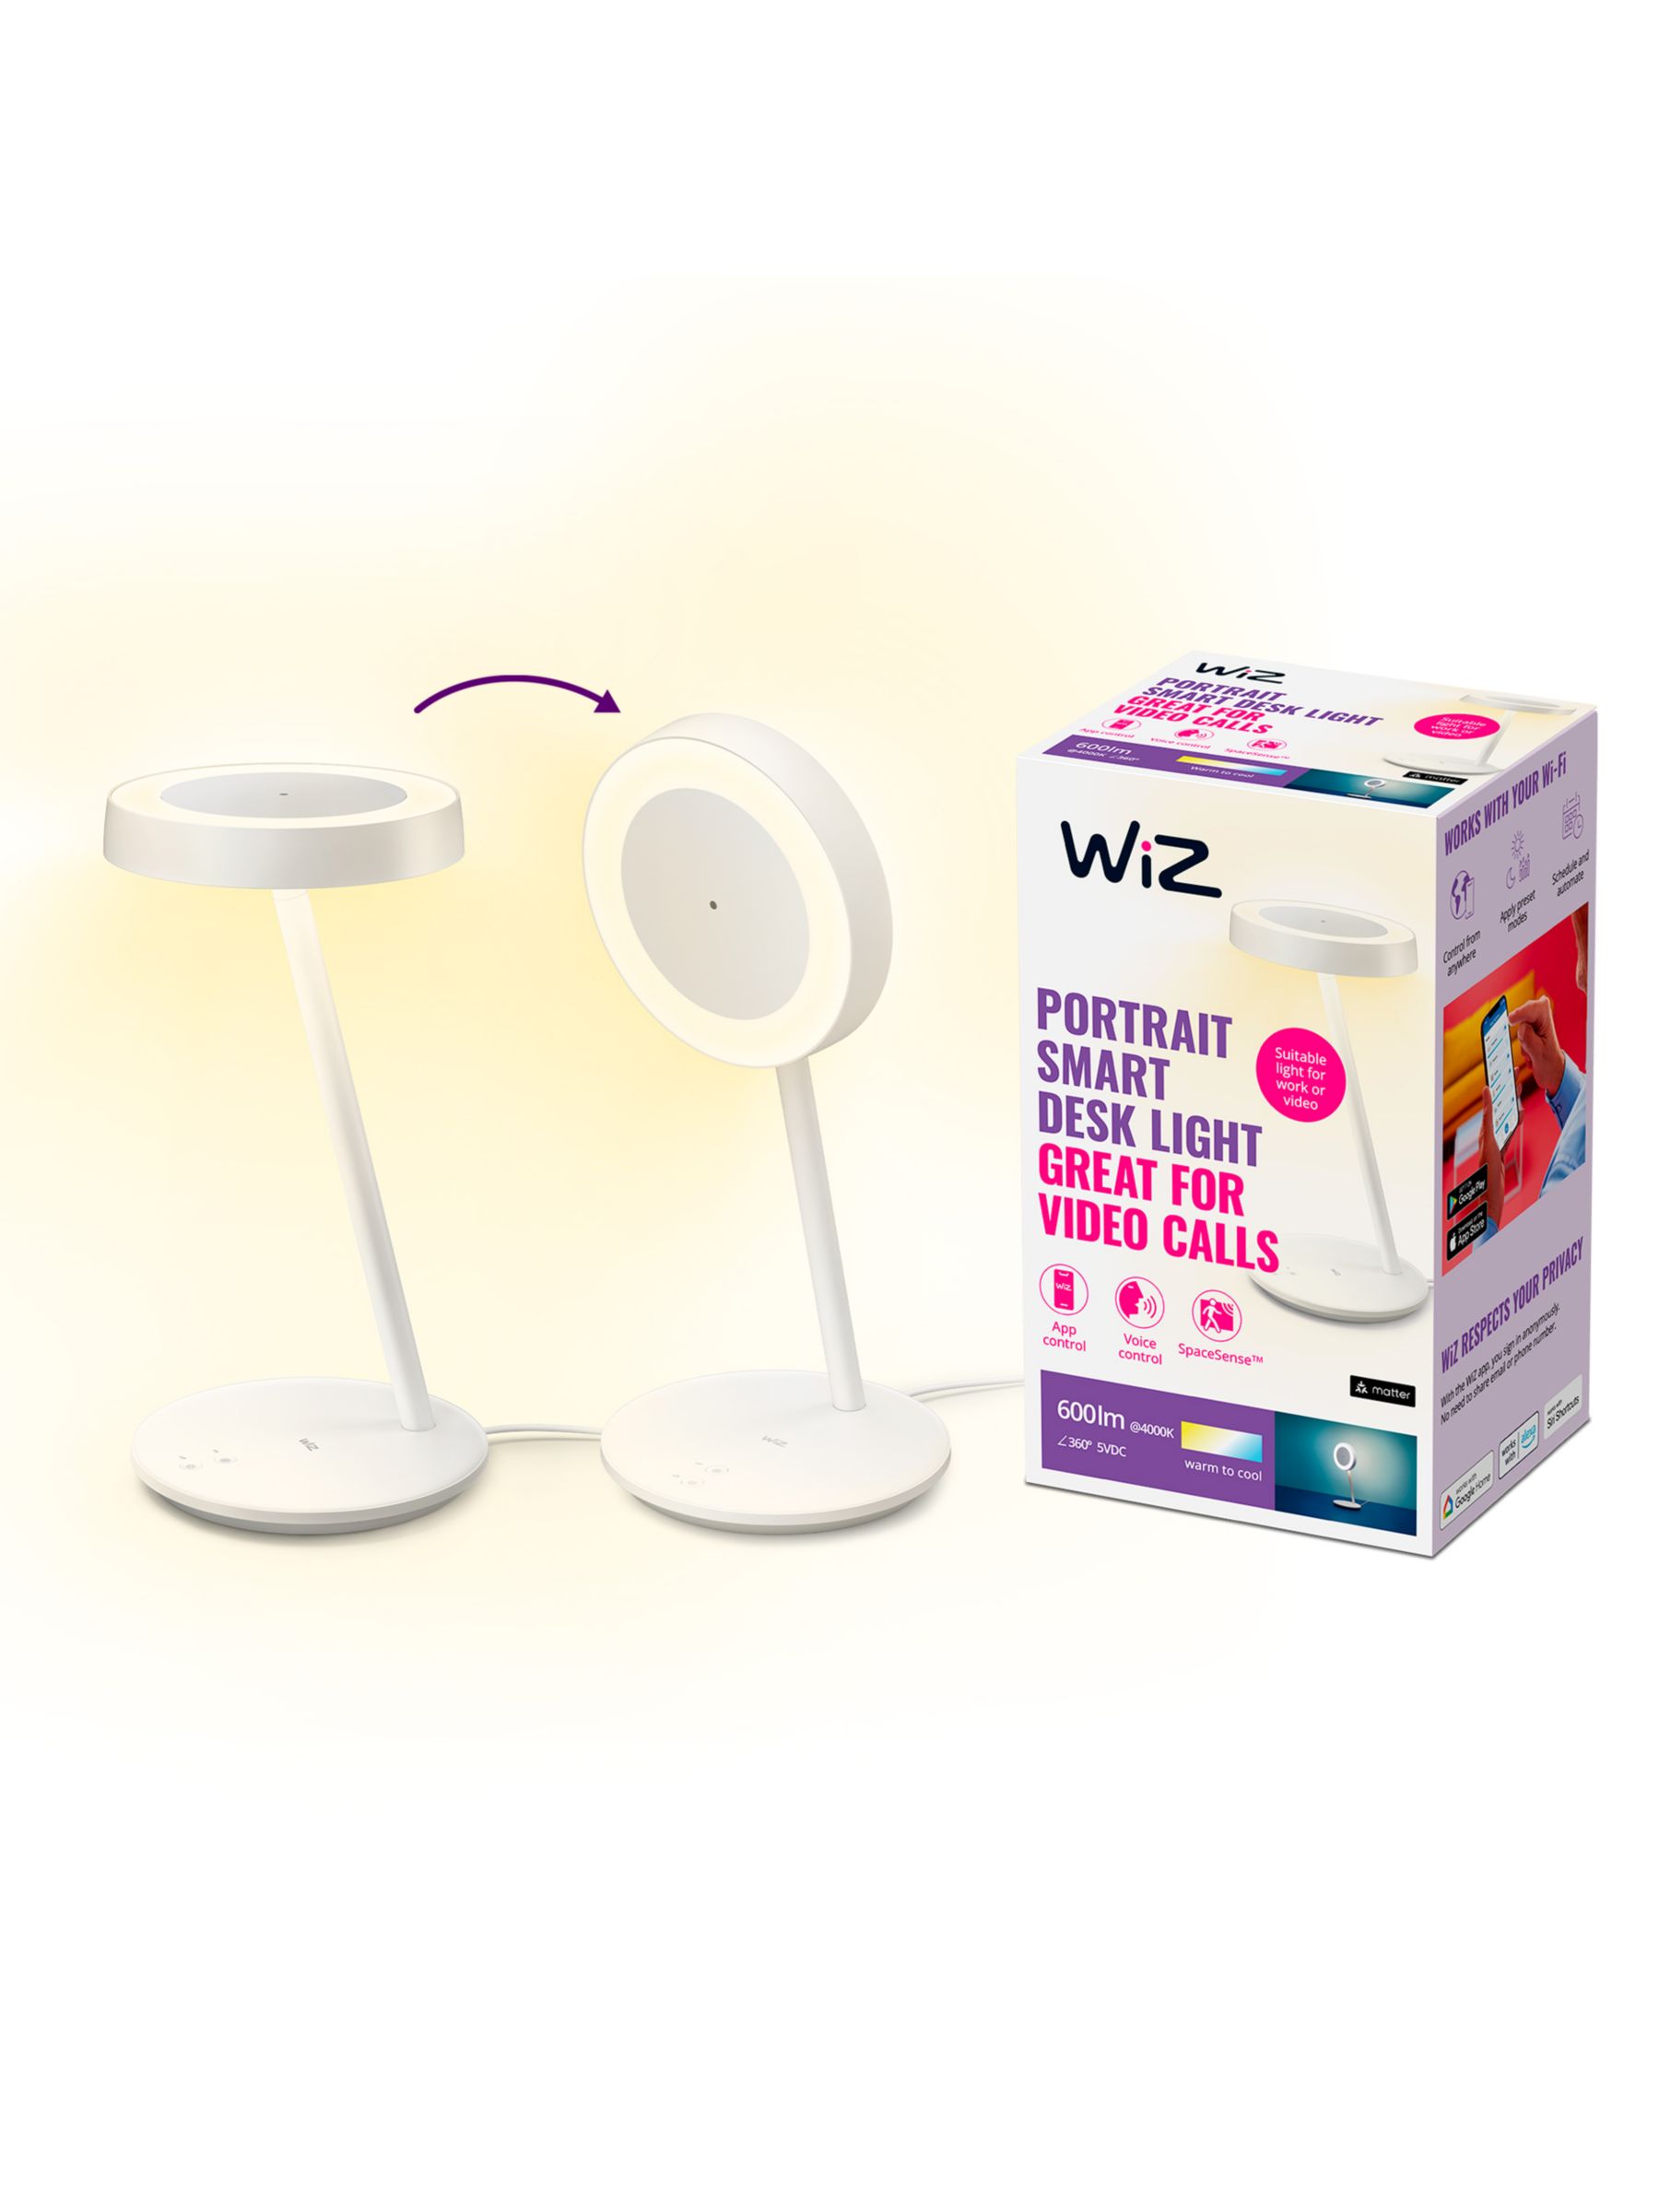 WiZ Portrait Smart Desk Lamp, White